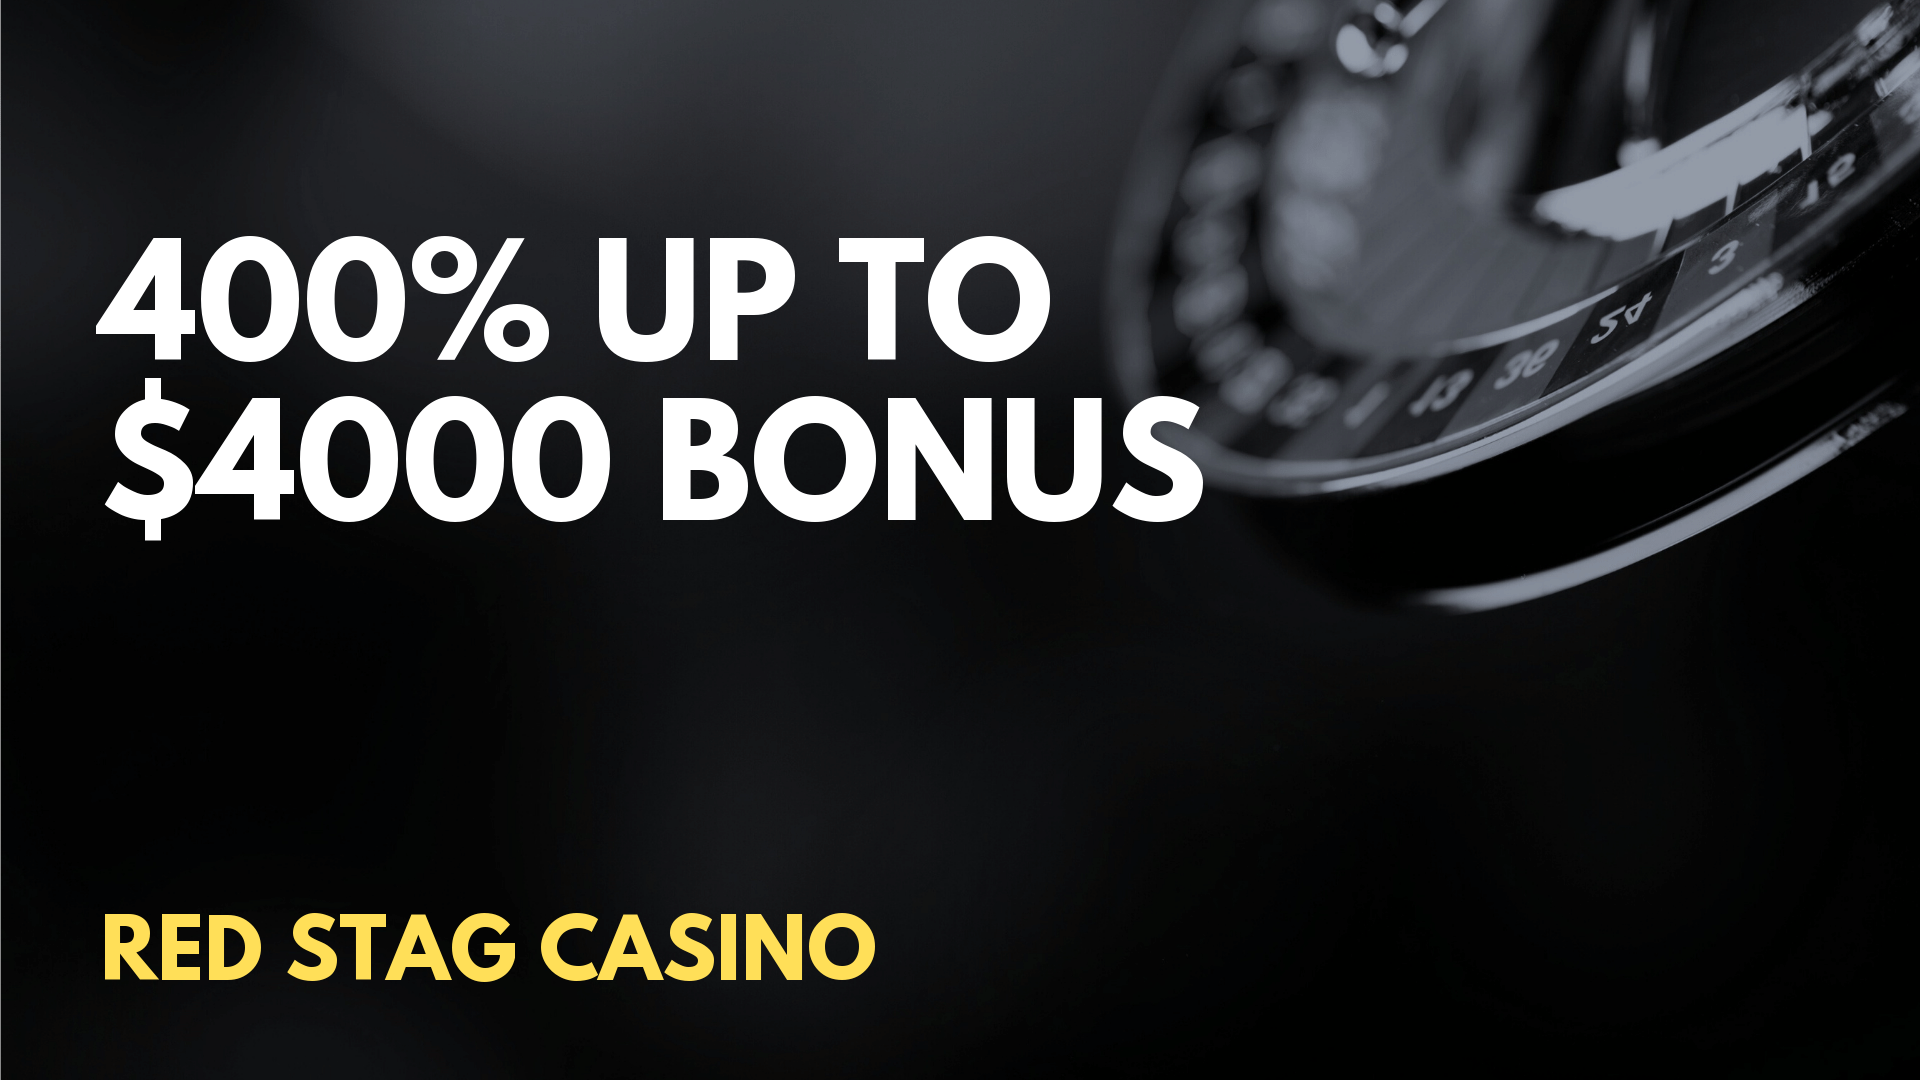 Red Stag Casino No Deposit Bonus Codes 2021 #1 - wide 6